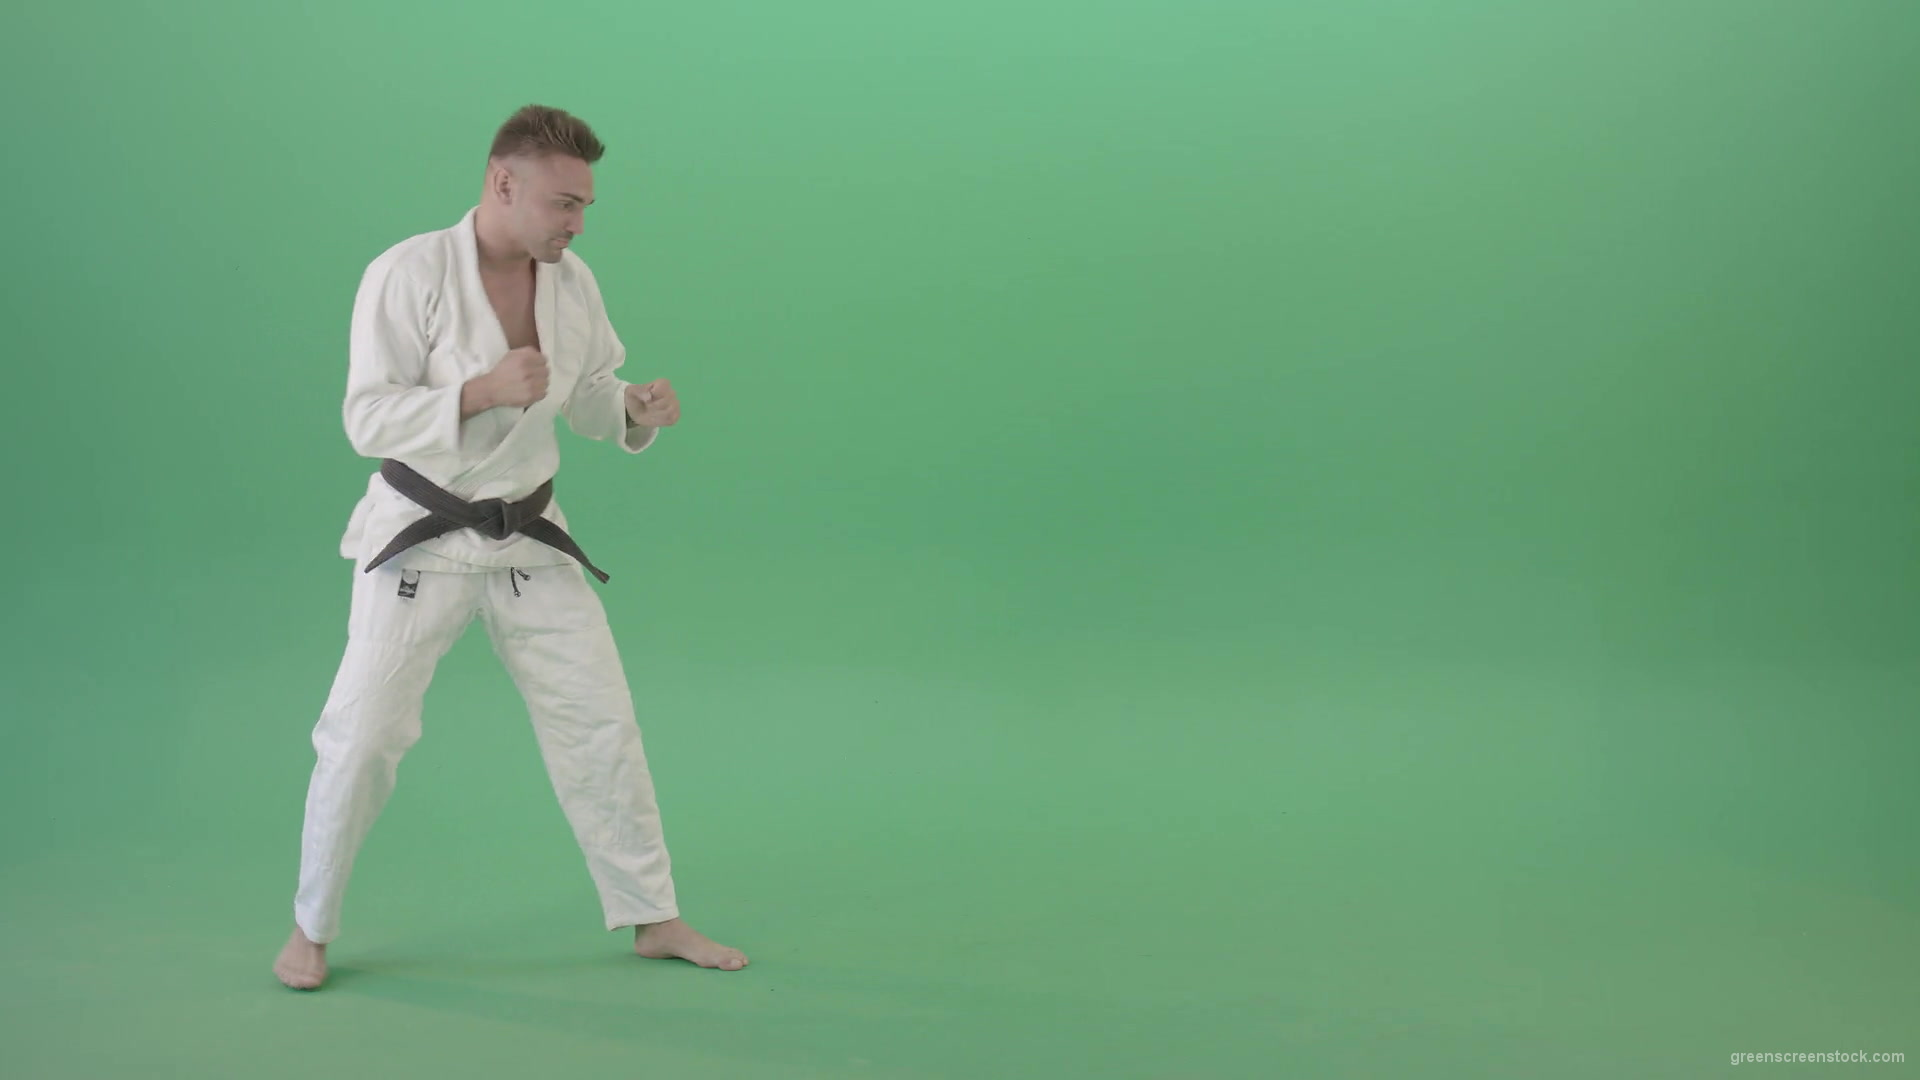 Ju-jutsu-young-man-training-slowly-karate-isolated-on-green-screen-4K-Video-Footage-1920_007 Green Screen Stock